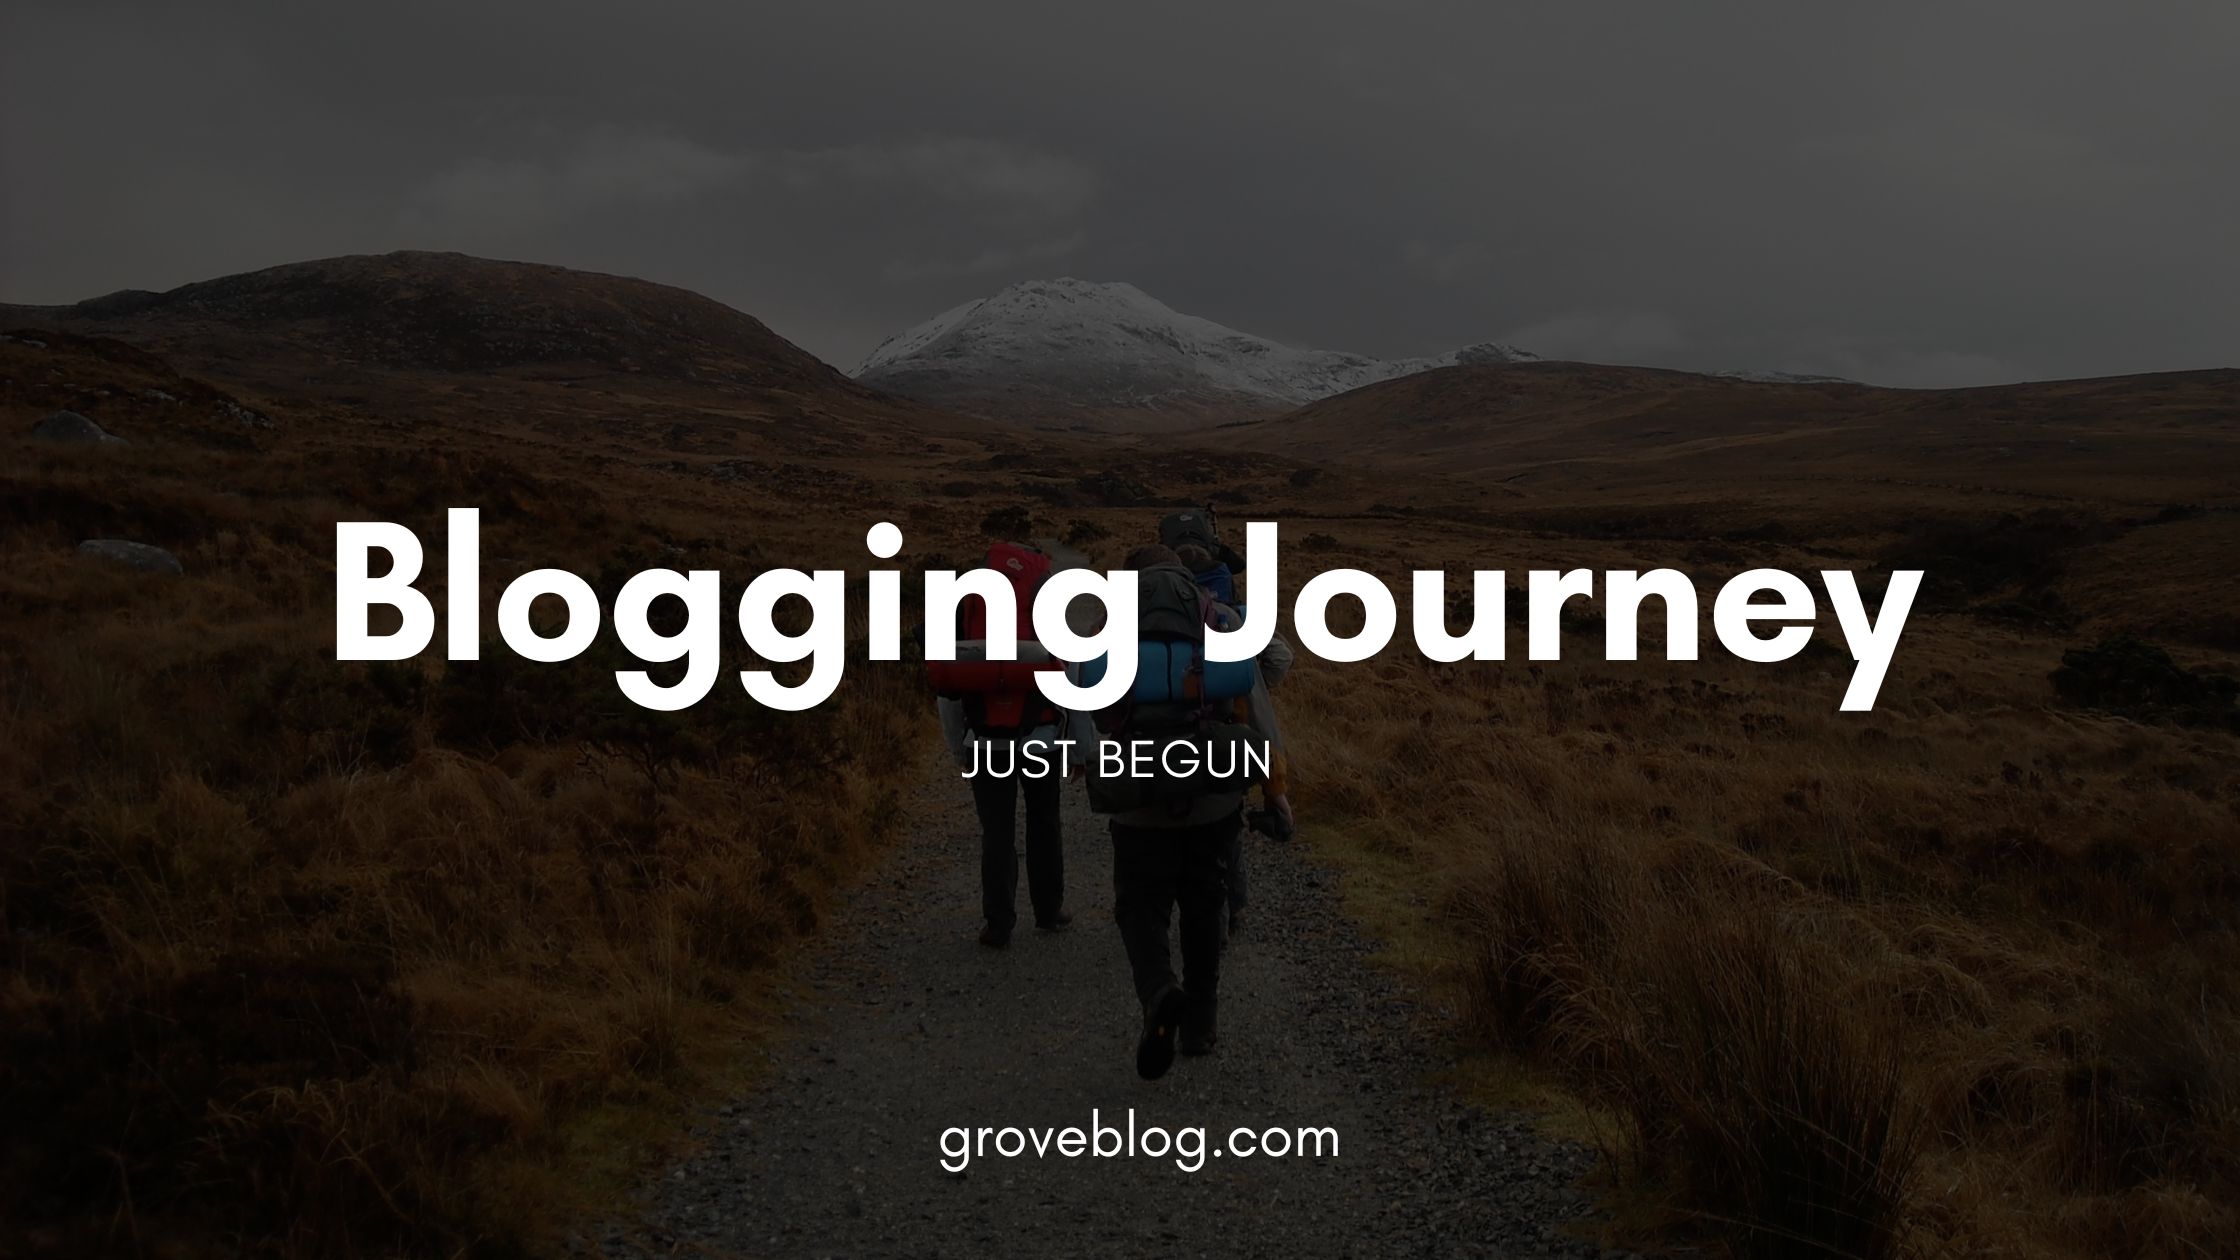 Blogging Journey Just Begun